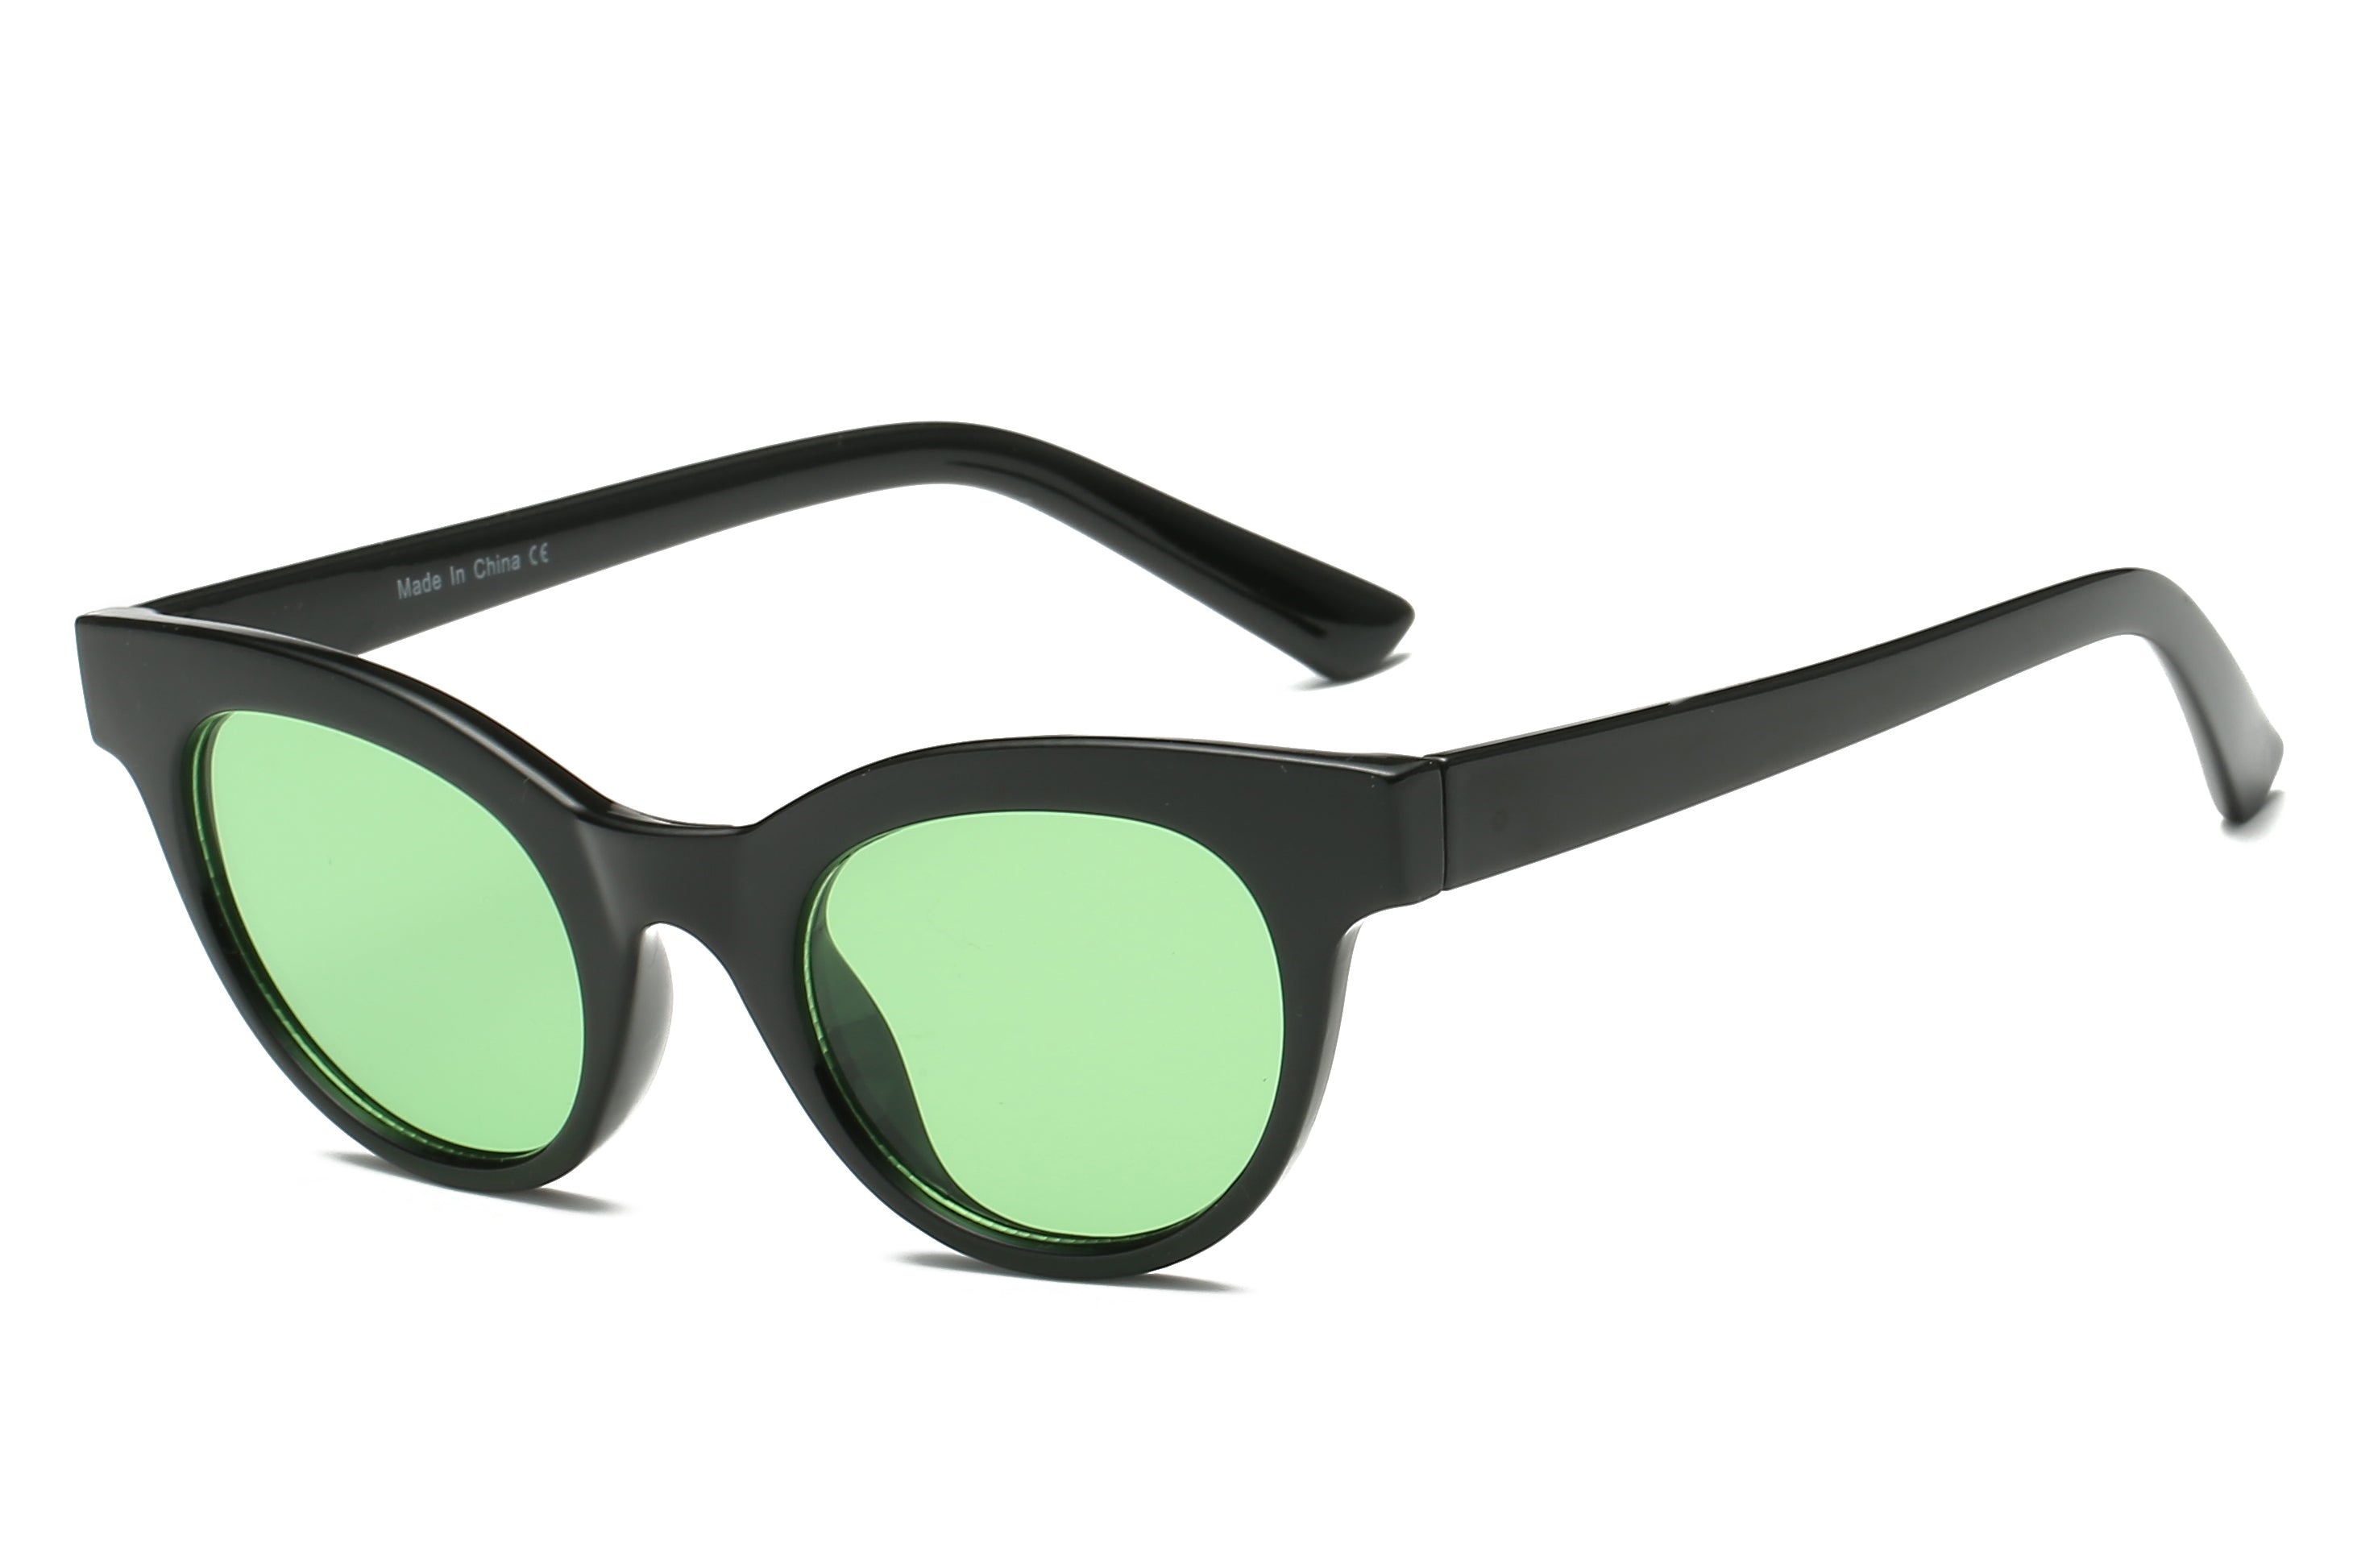 S1056 - Women Chic Round Tinted Fashion Cat Eye SUNGLASSES Black/Green